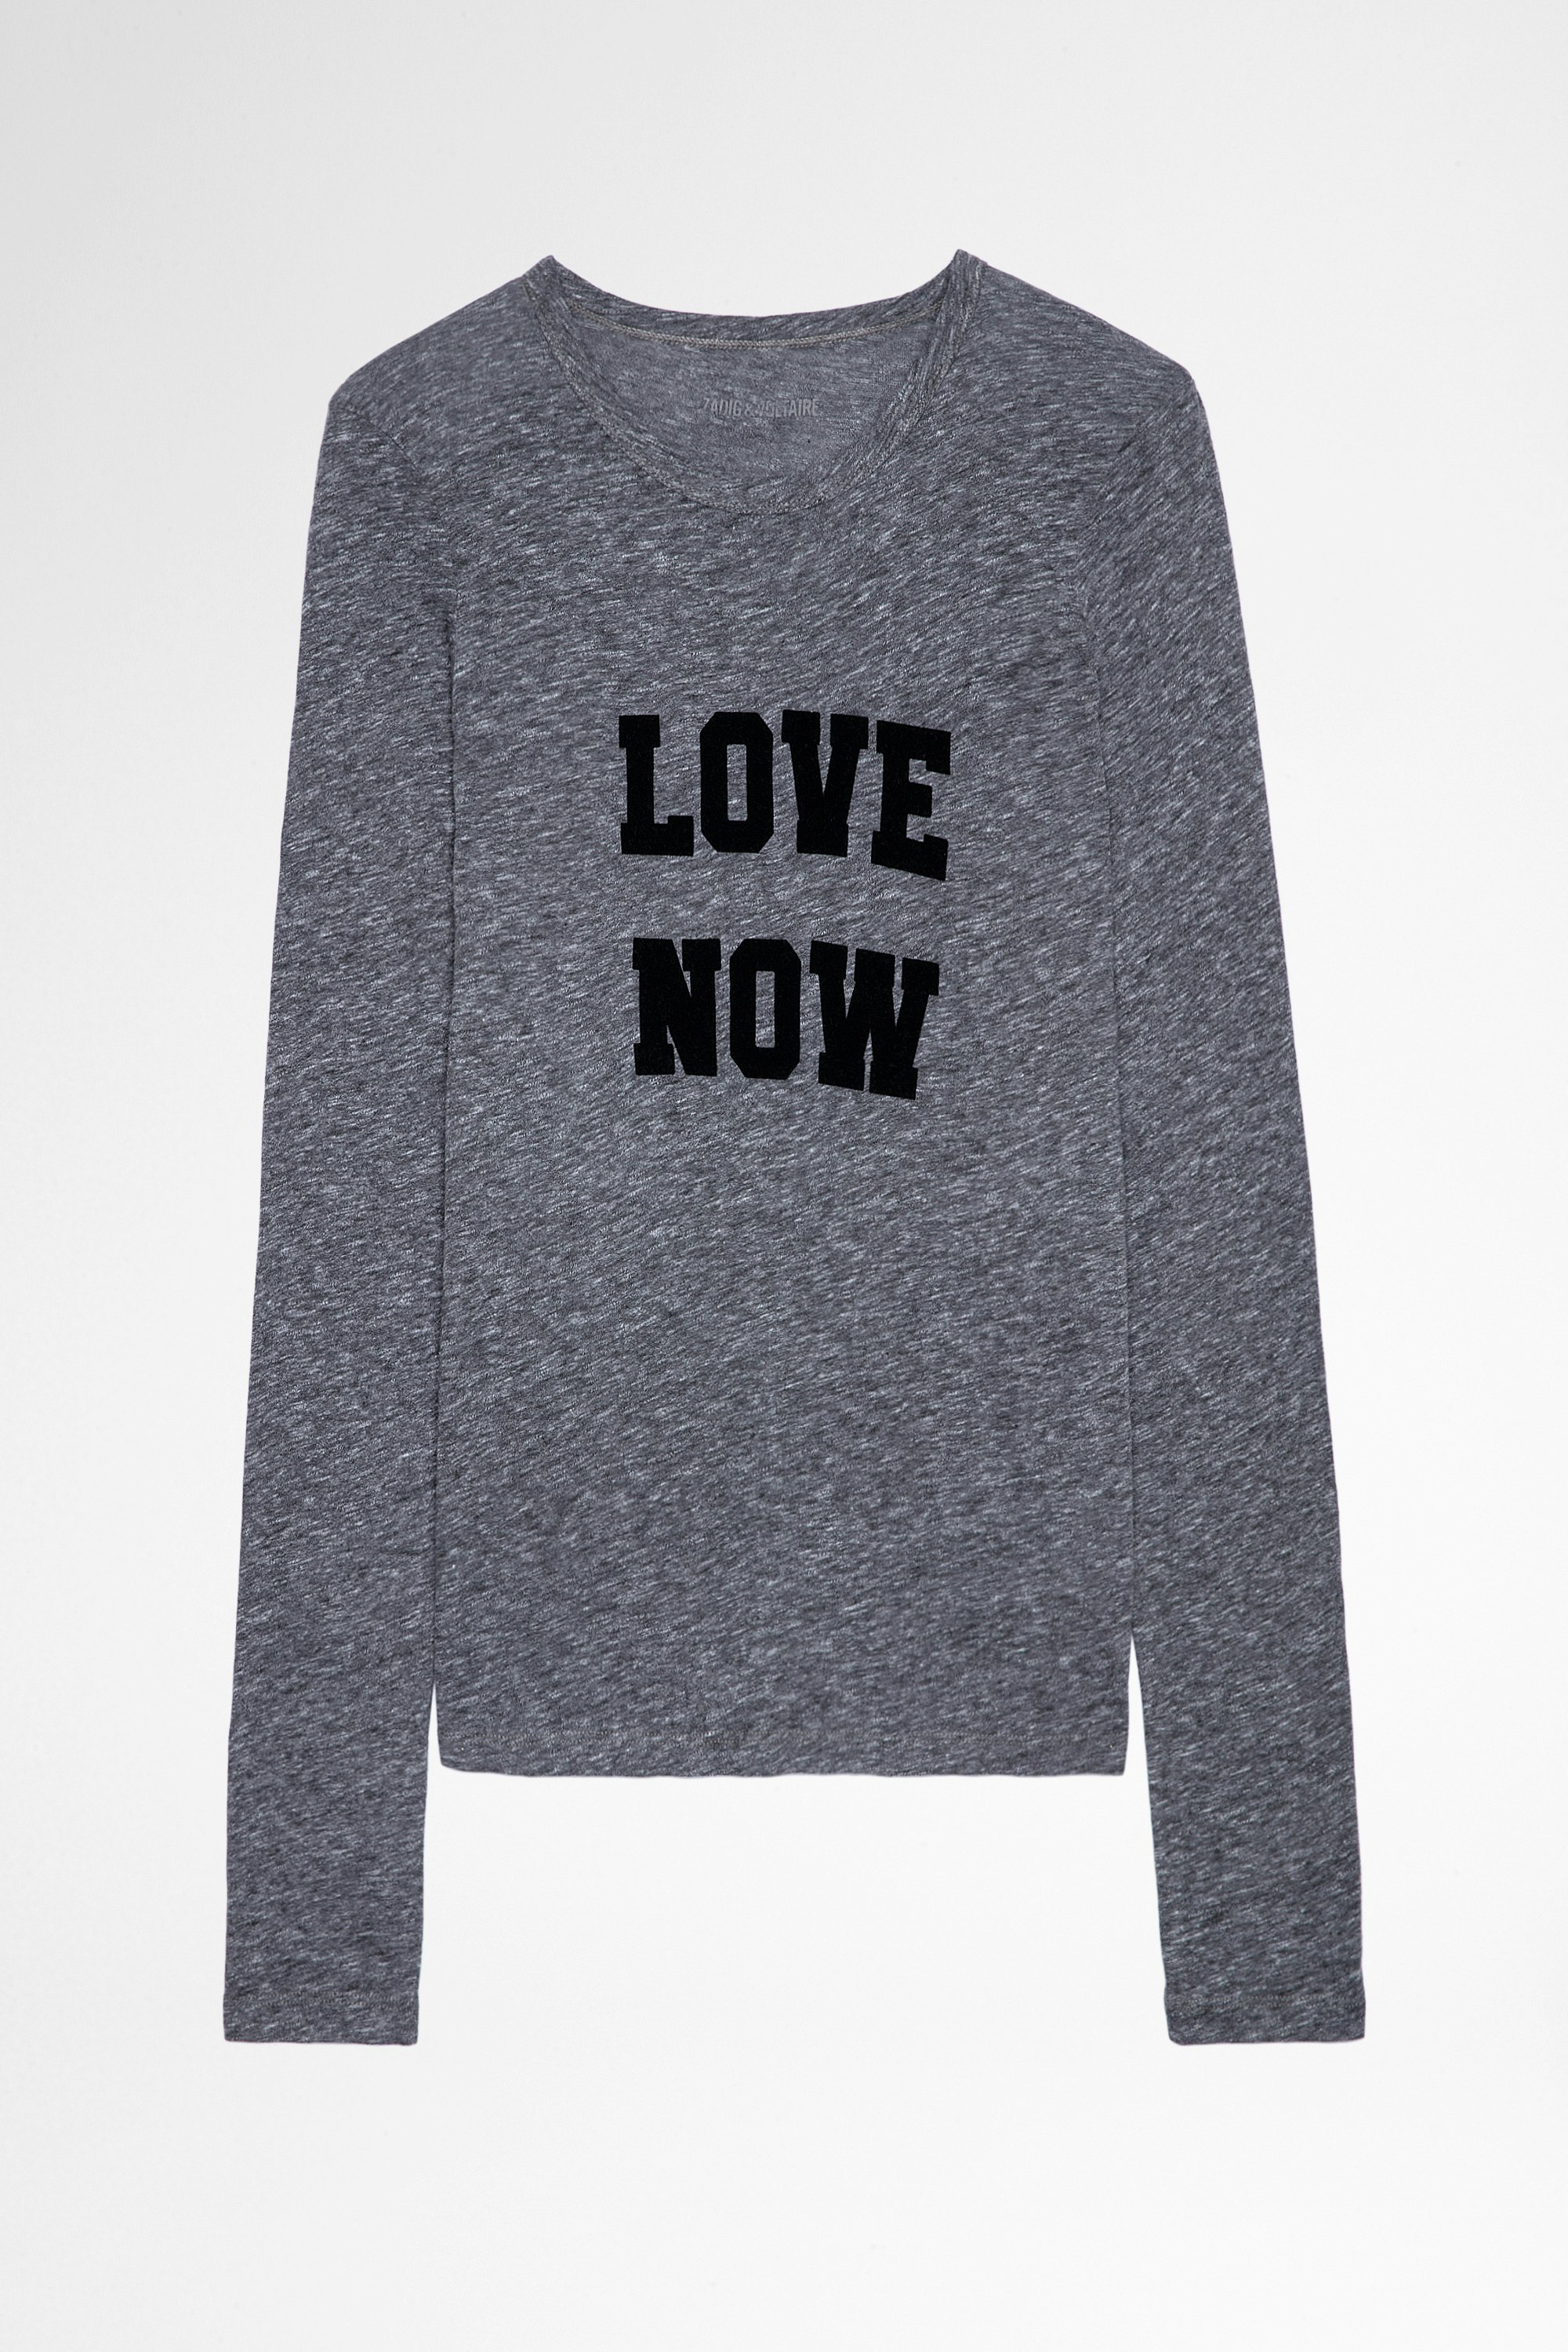 Camiseta Willy Camiseta de mujer gris Love Now de manga larga